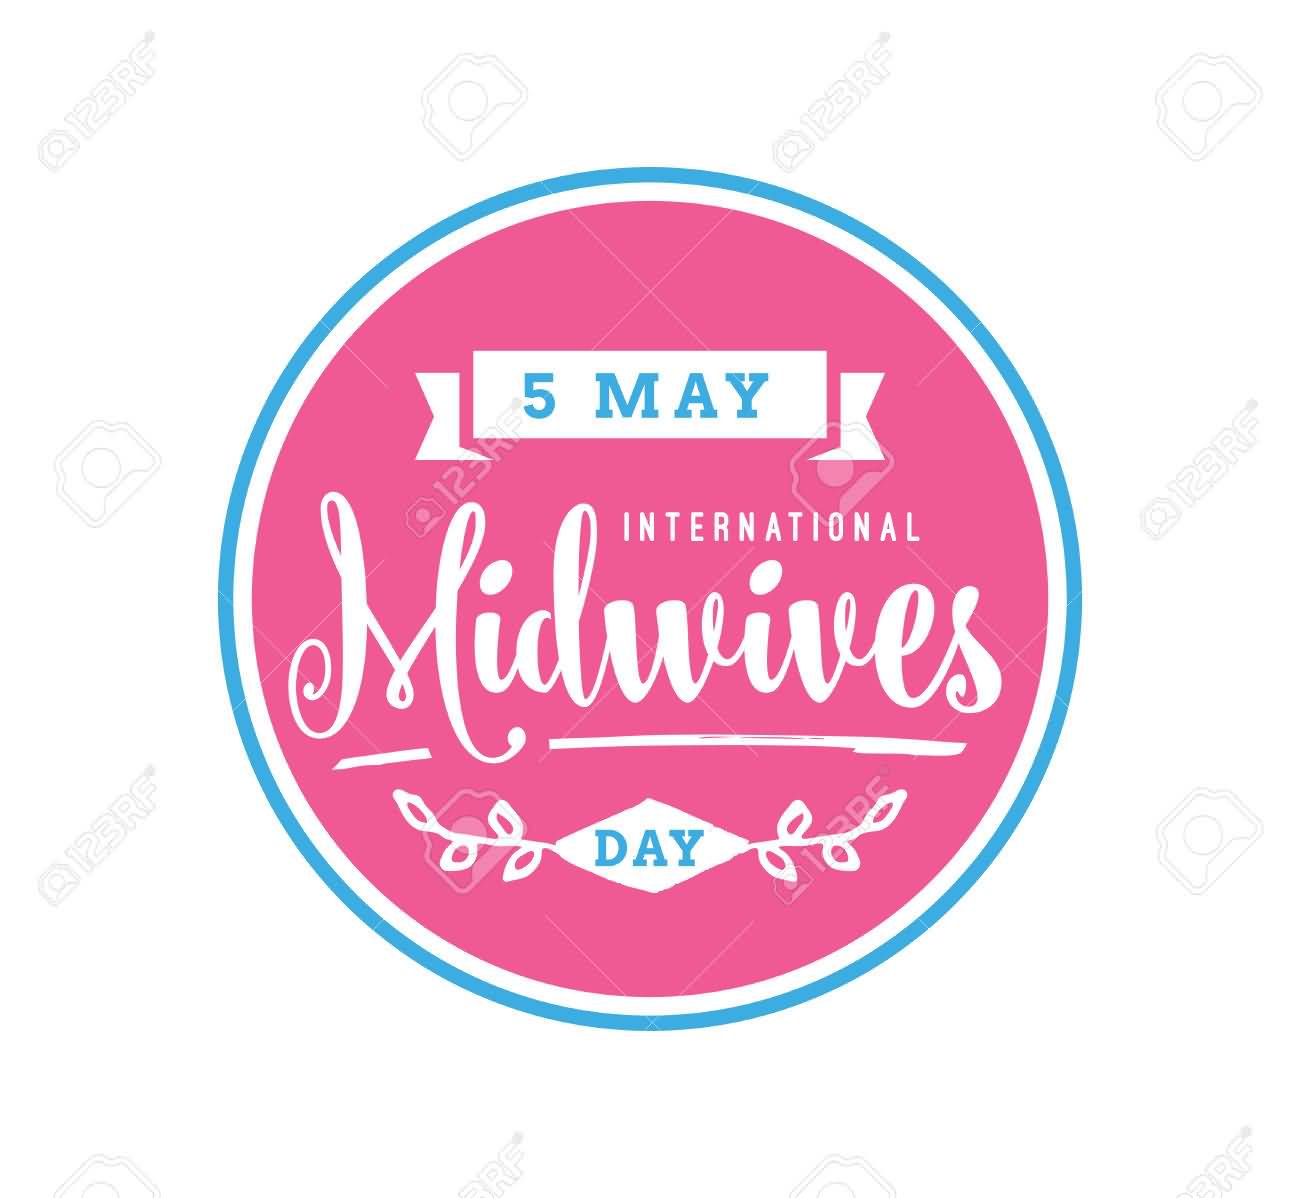 5 May International Midwives Day Greeting Card